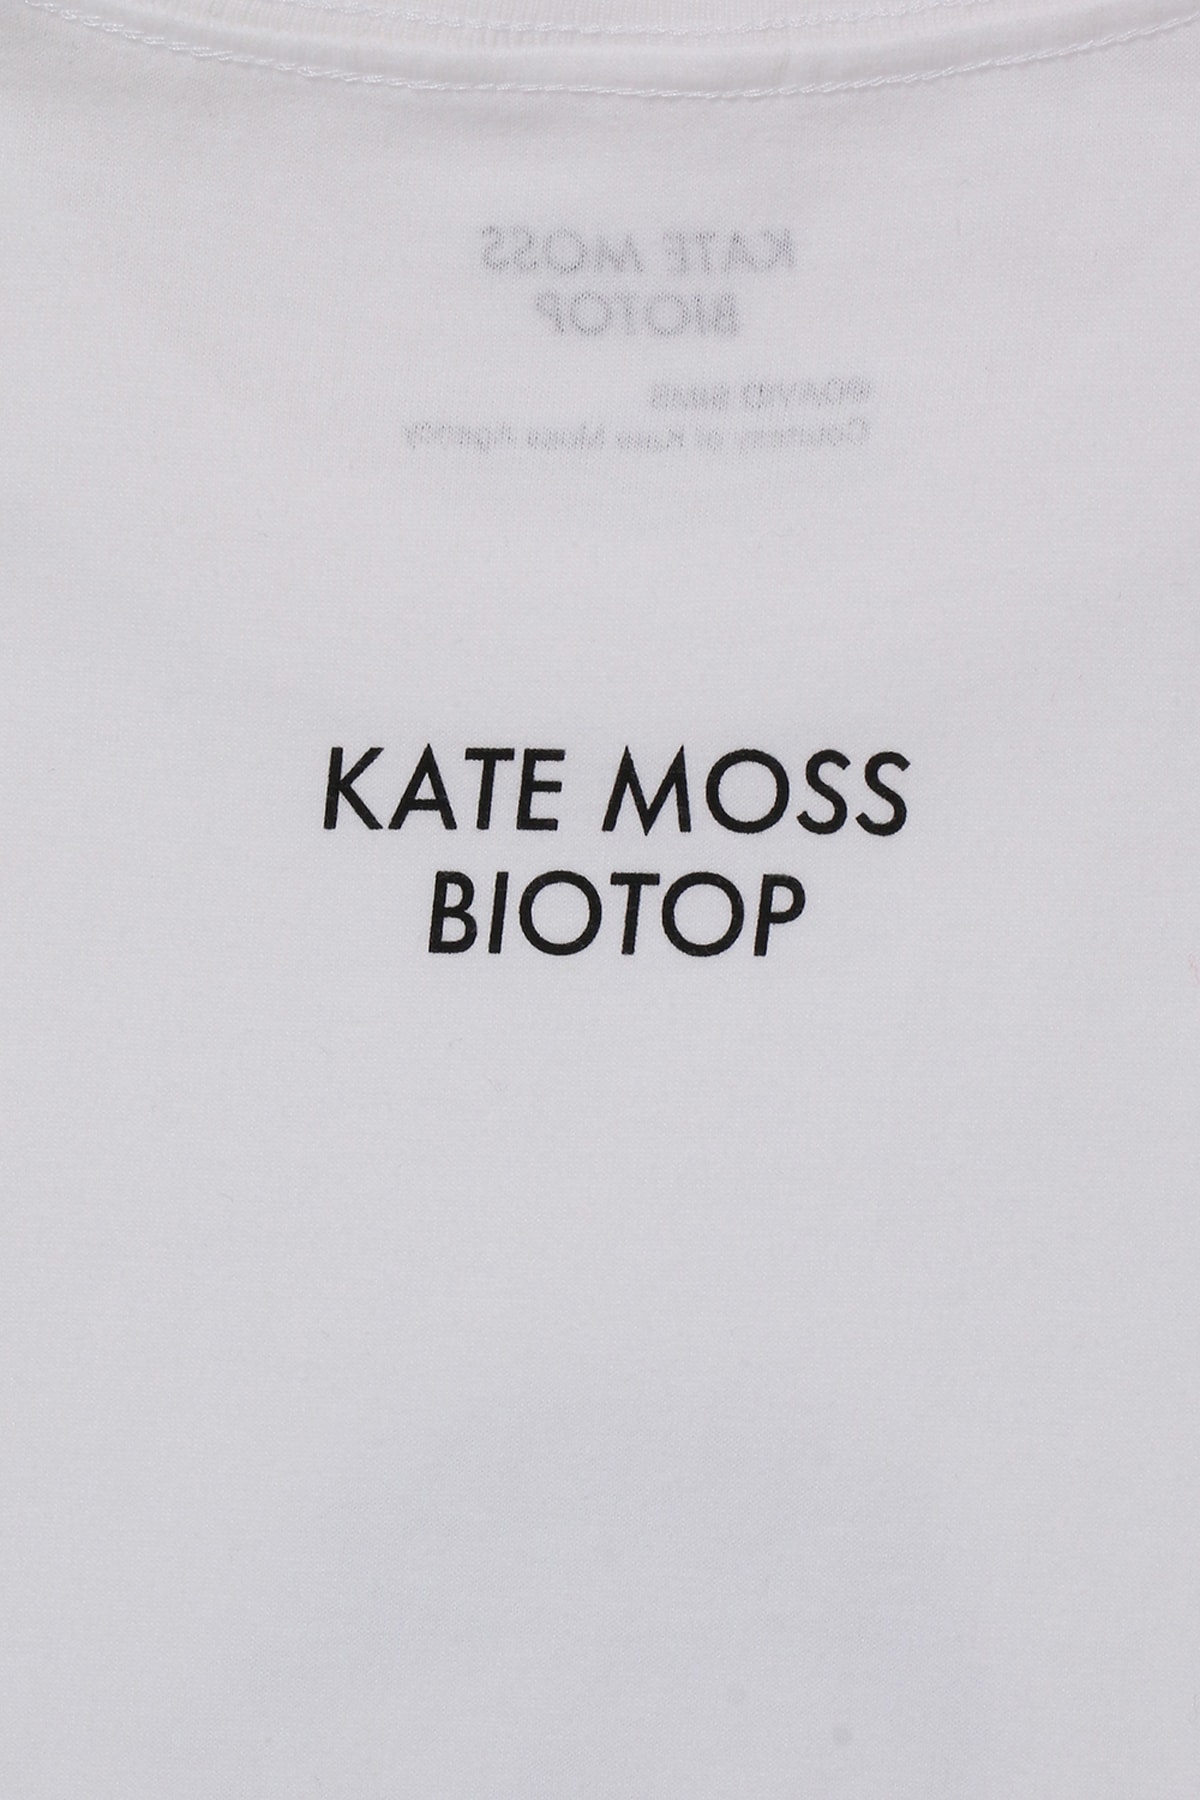 BIOTOP 推出 Kate Moss x David Sims 最新聯名 T-Shirt